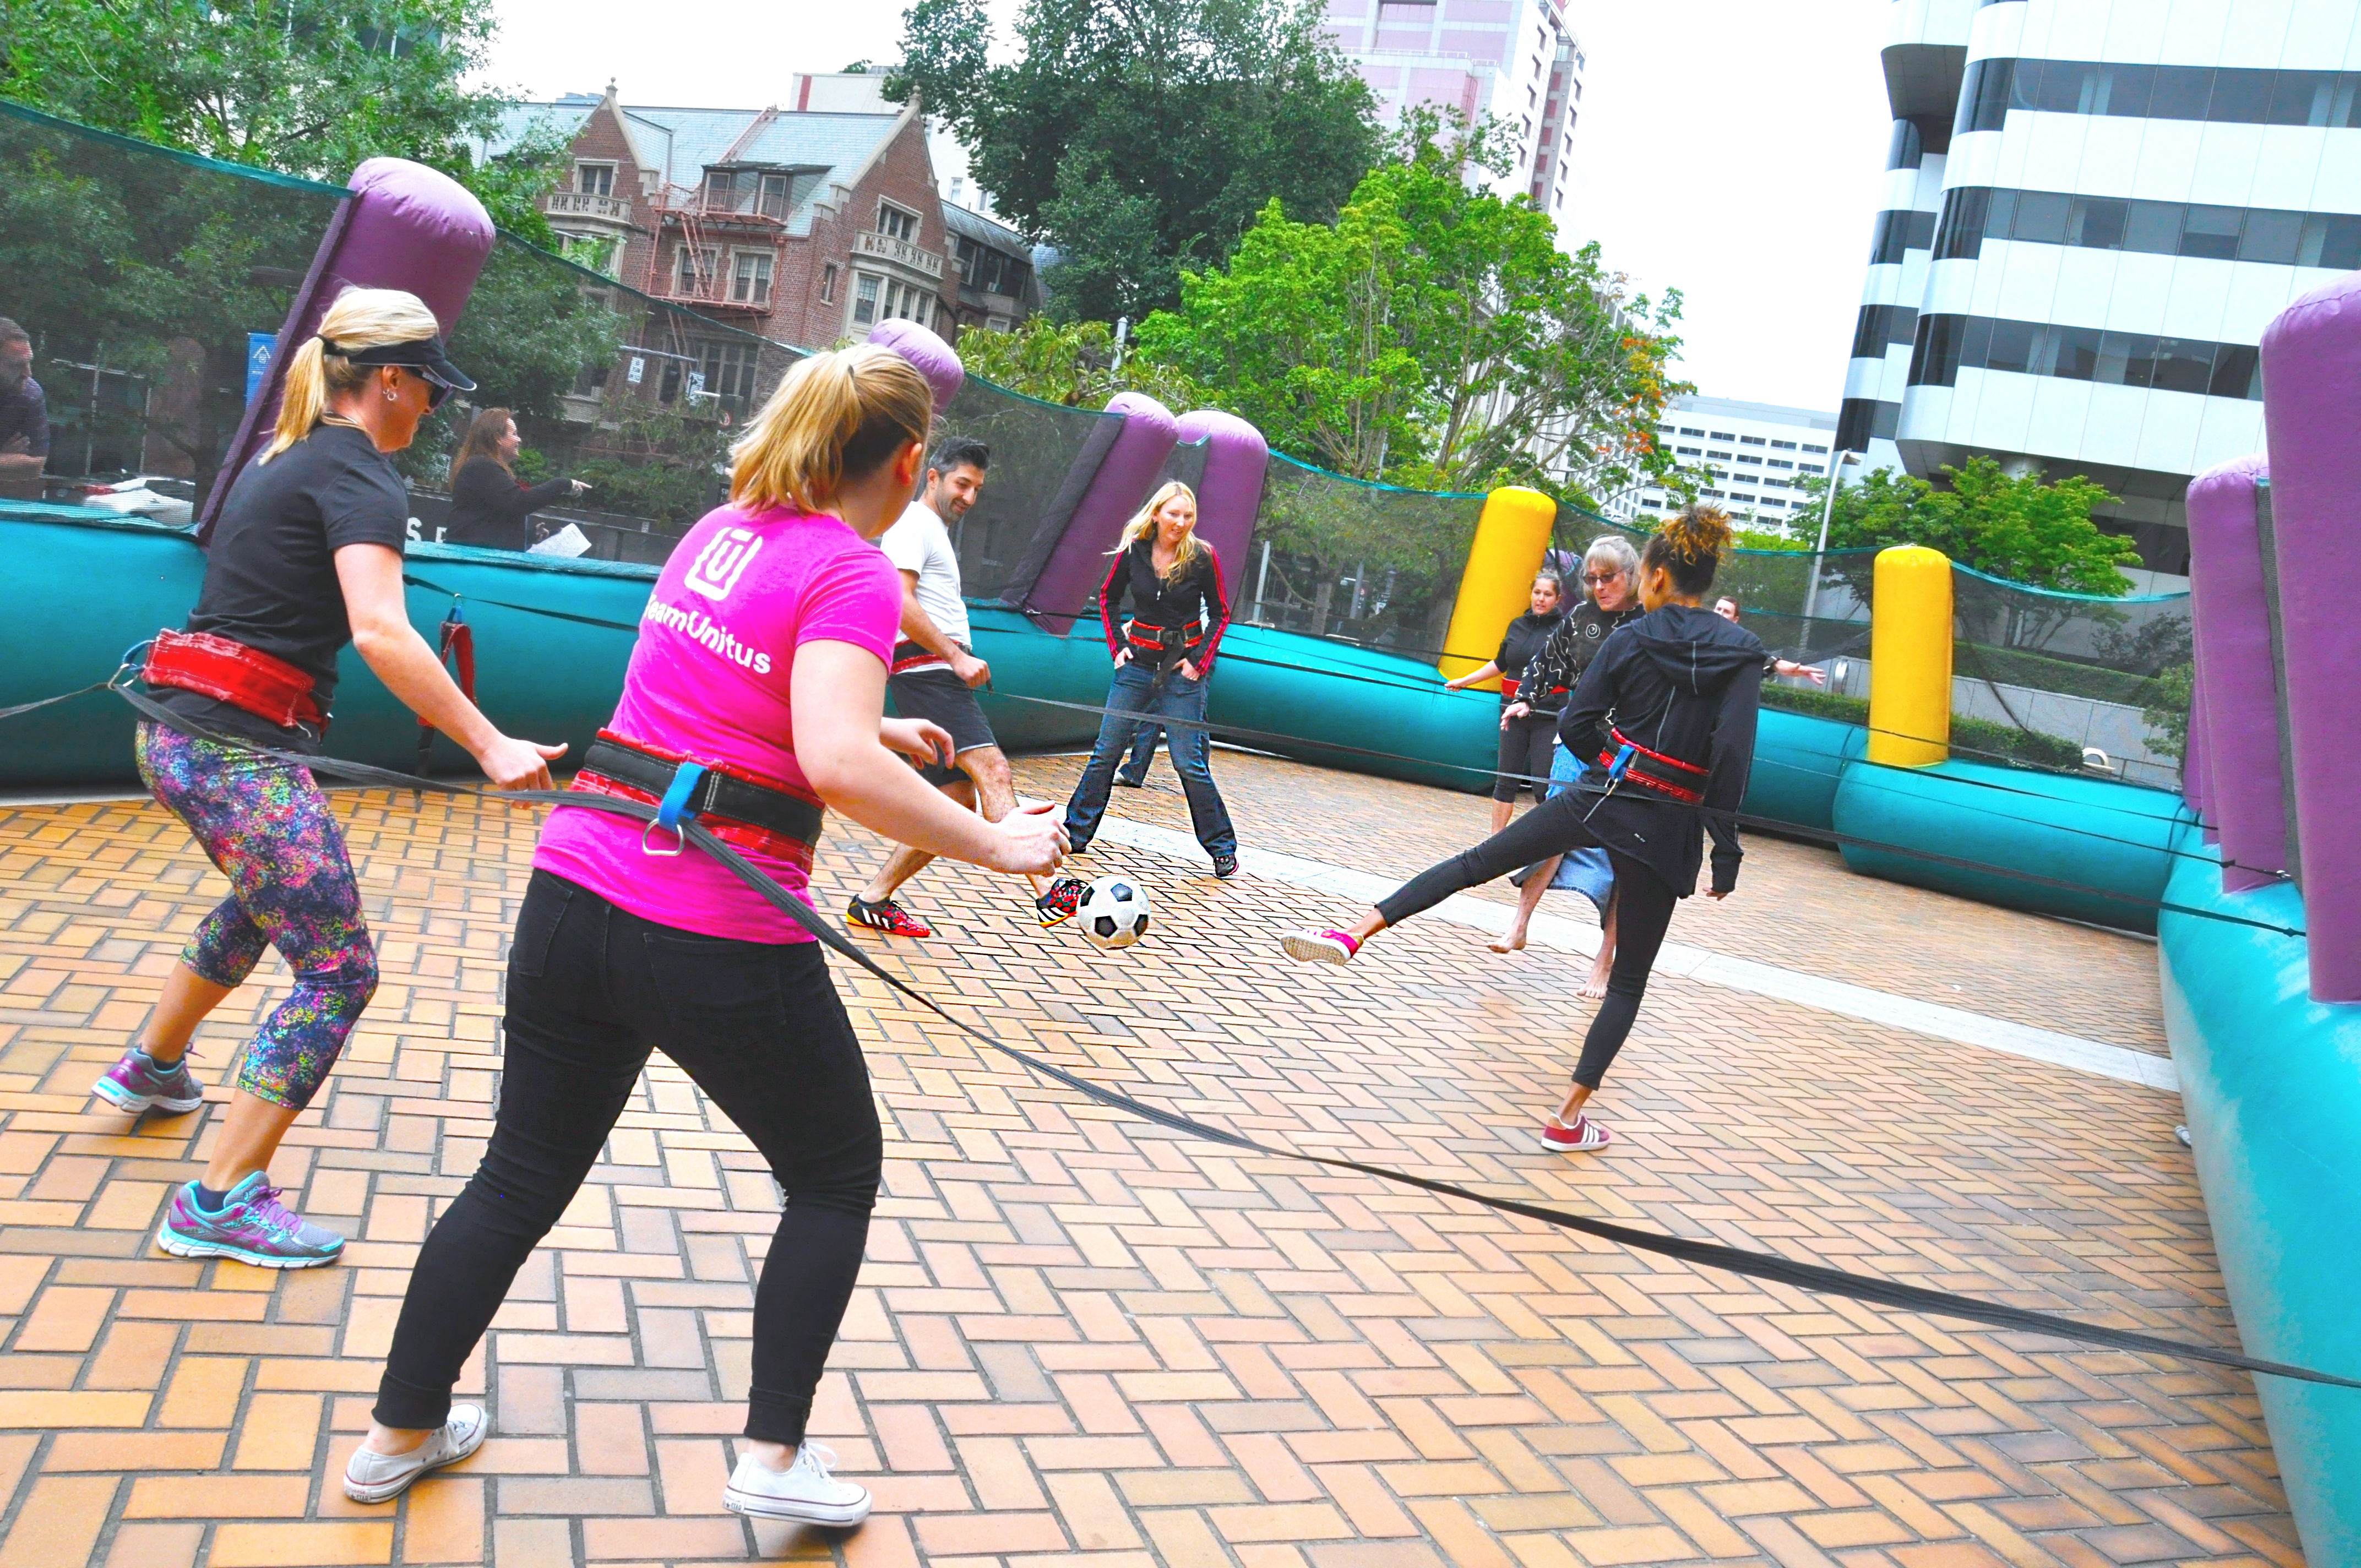 Teams playing Human Foosball in Unitus Plaza downtown Oregon